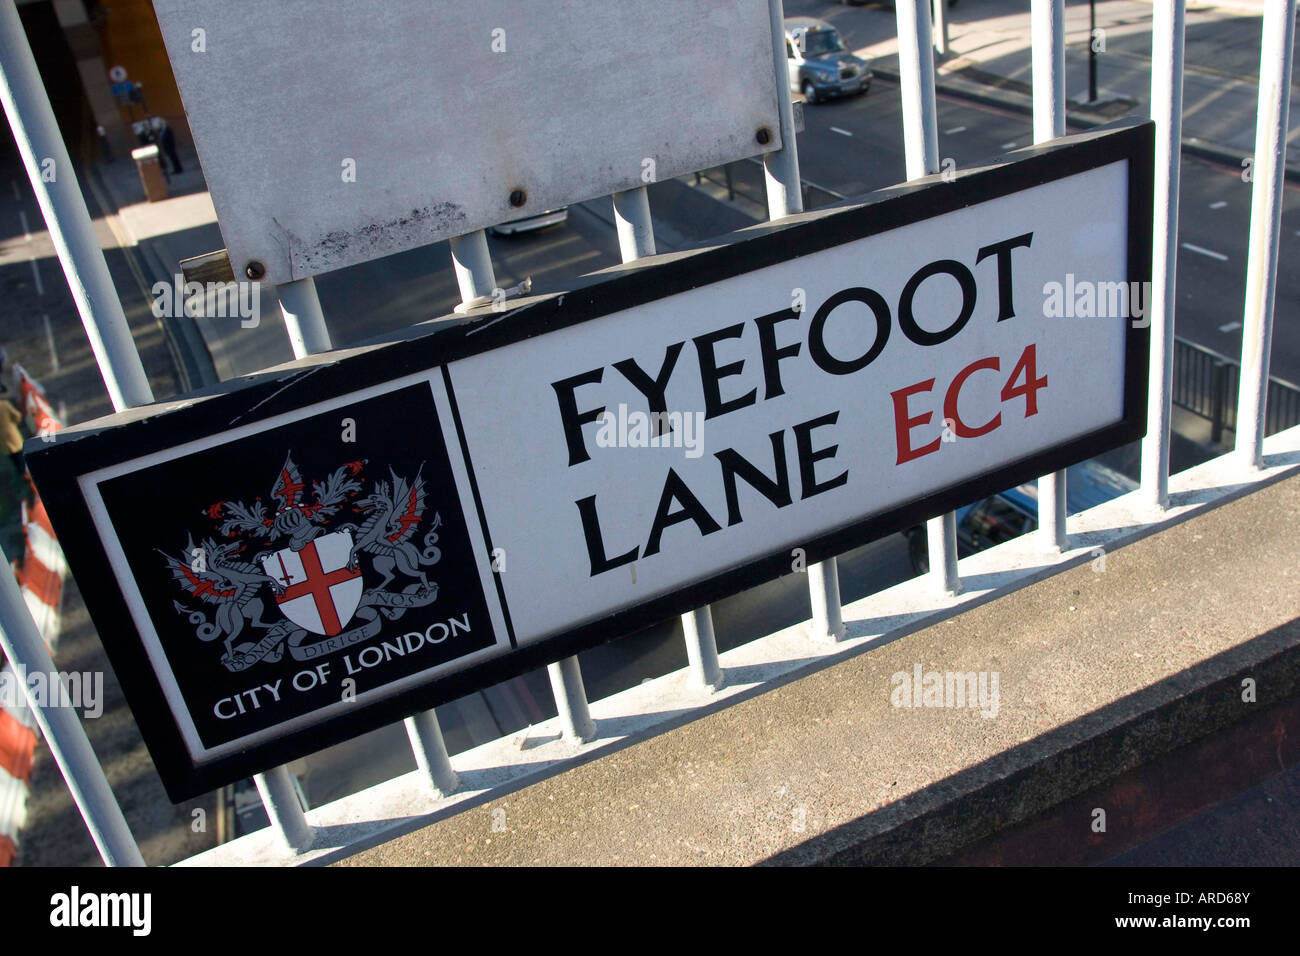 Sign for Fyefoot Lane EC4 City of London Stock Photo